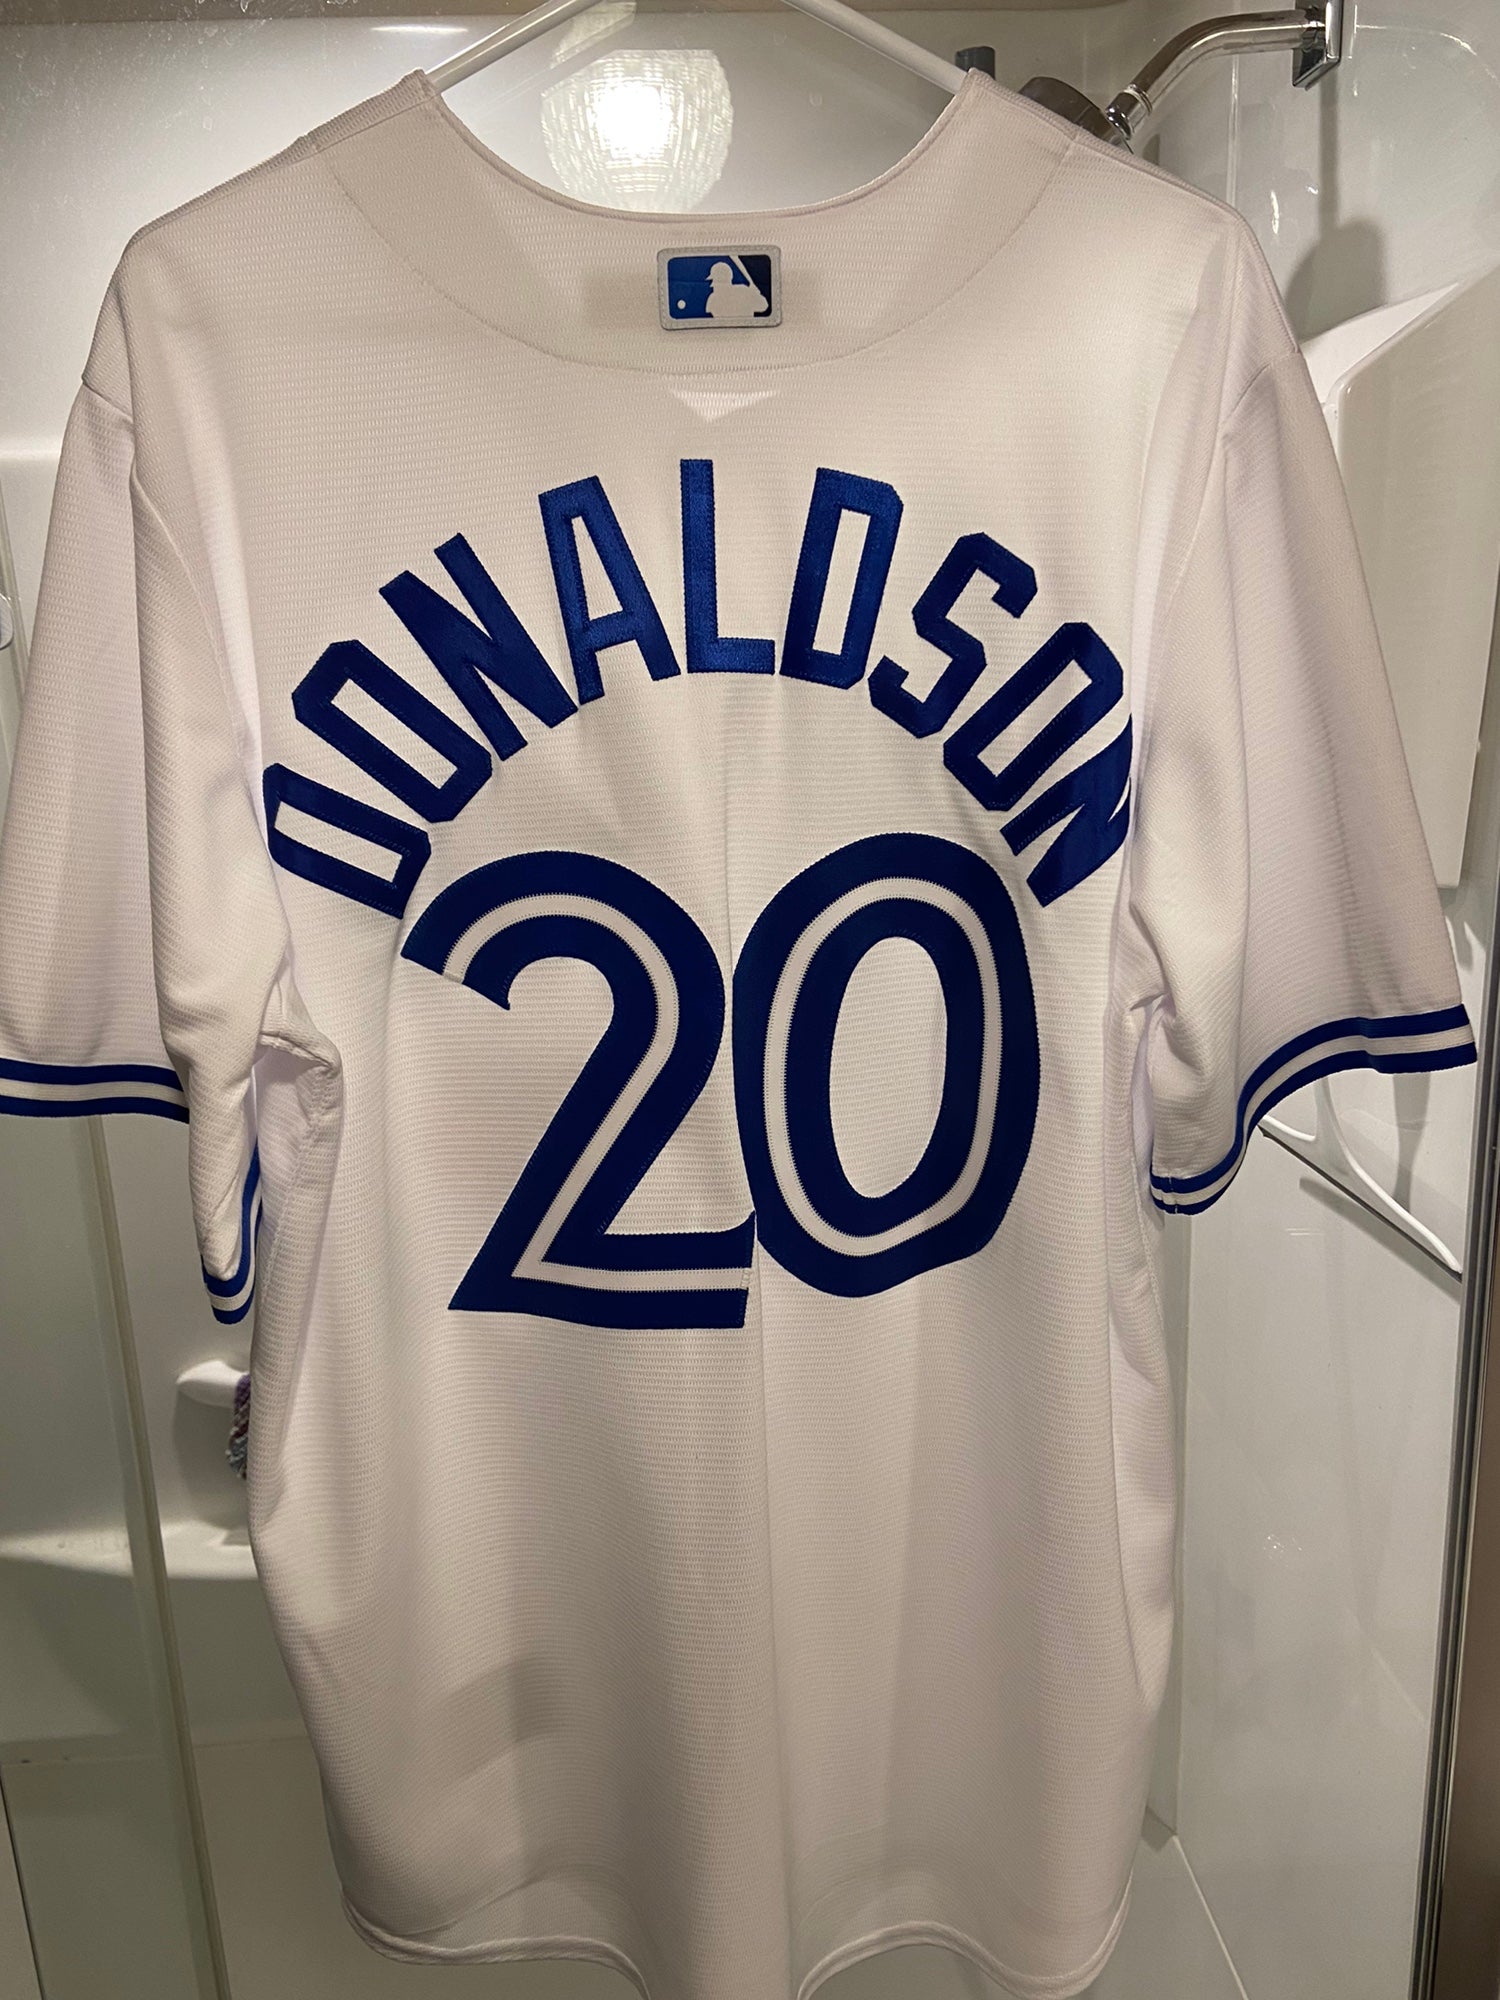 Toronto Blue Jays Jersey #20 Donaldson Majestic Blue Shirt Size